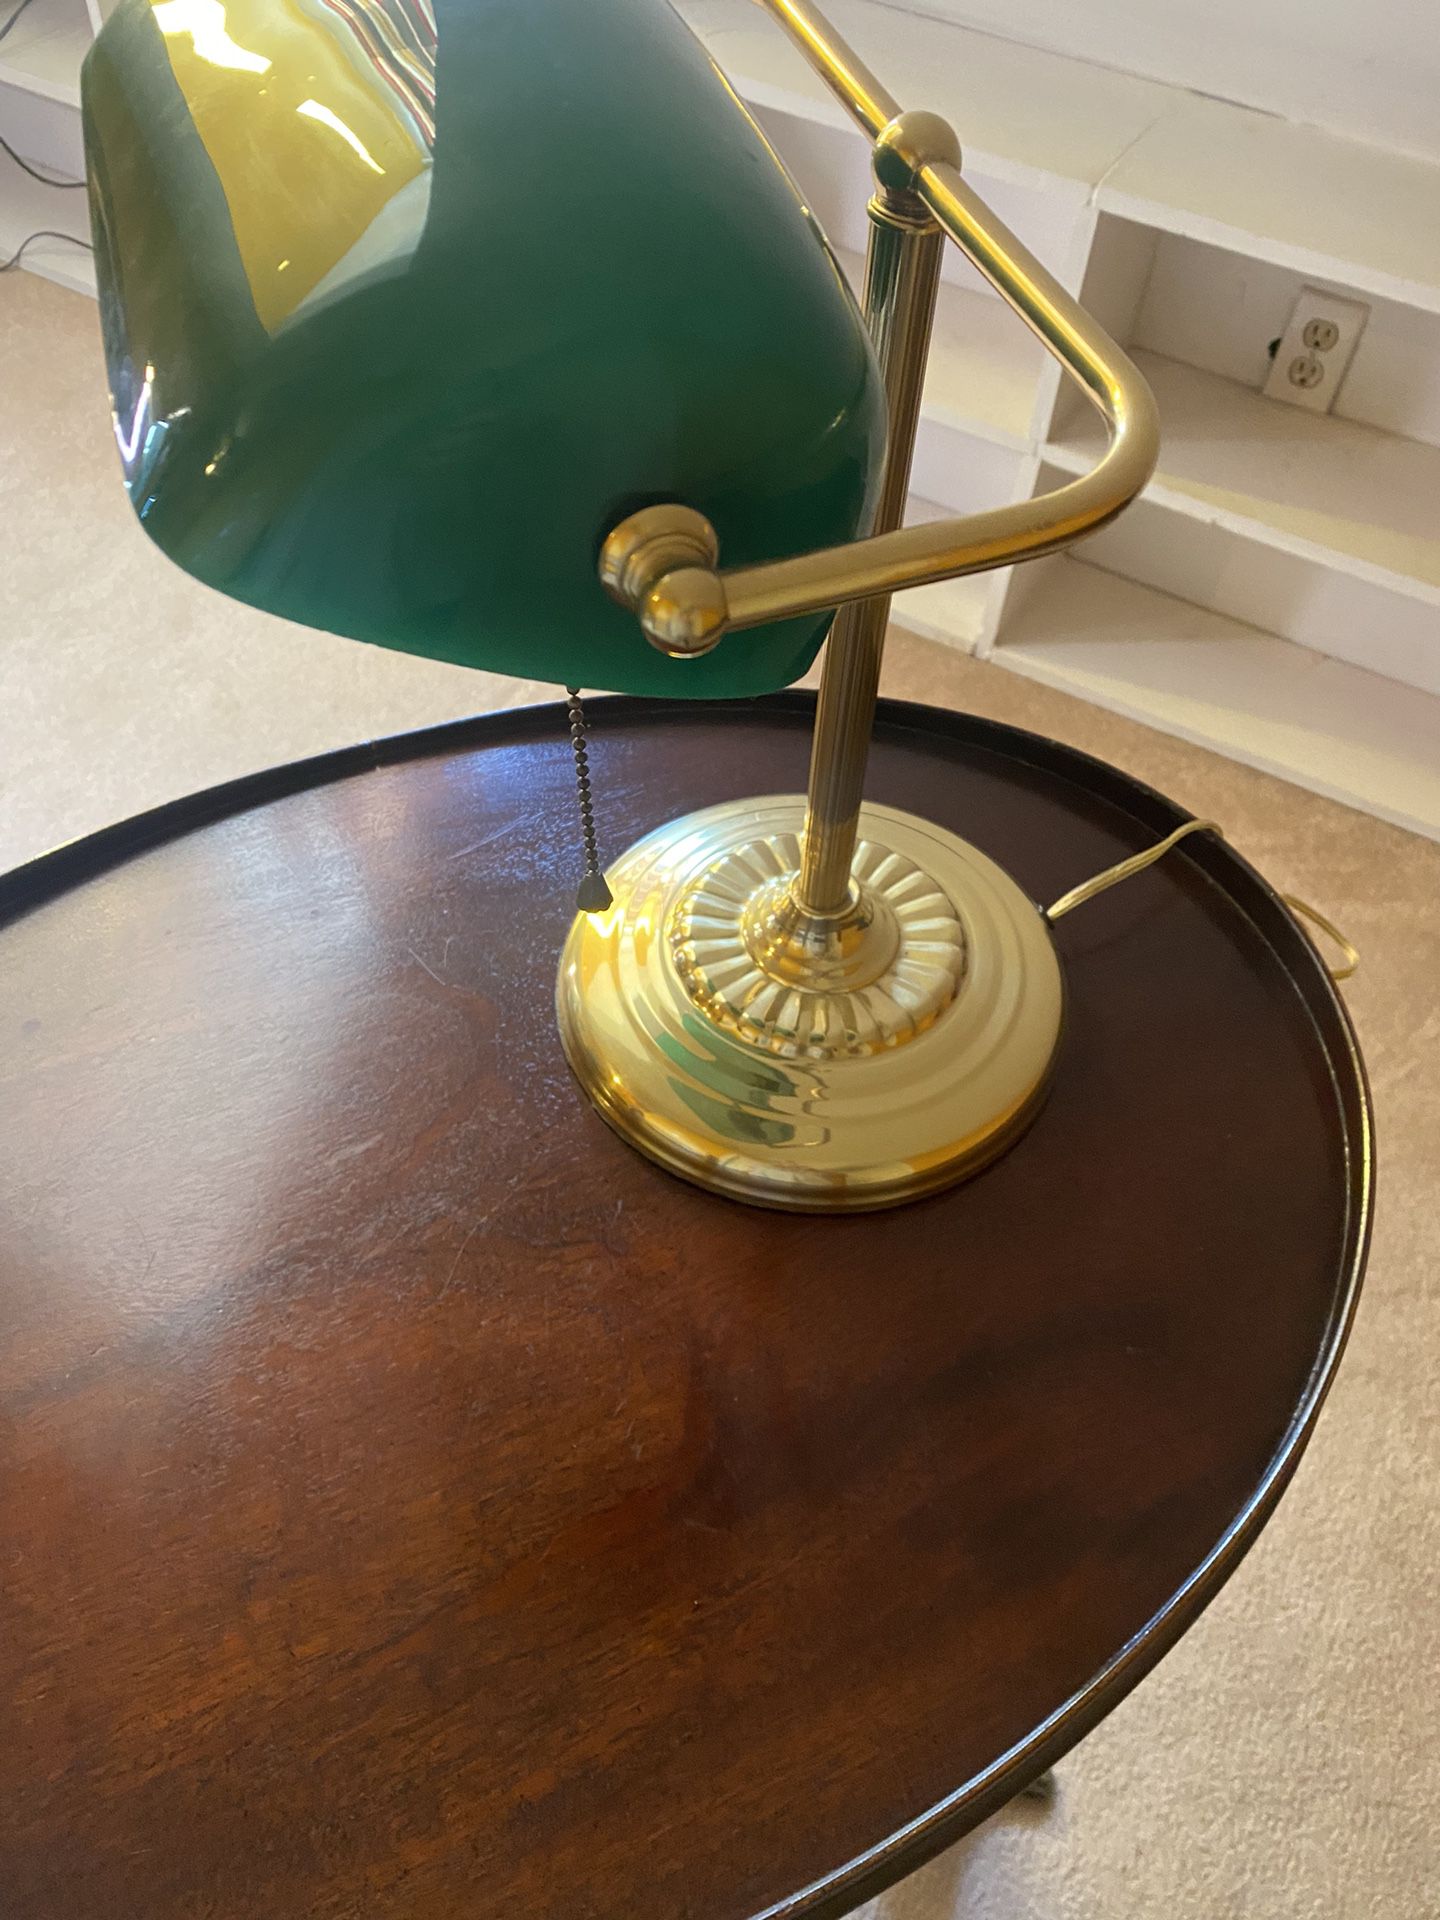 Antique Desk Lamp